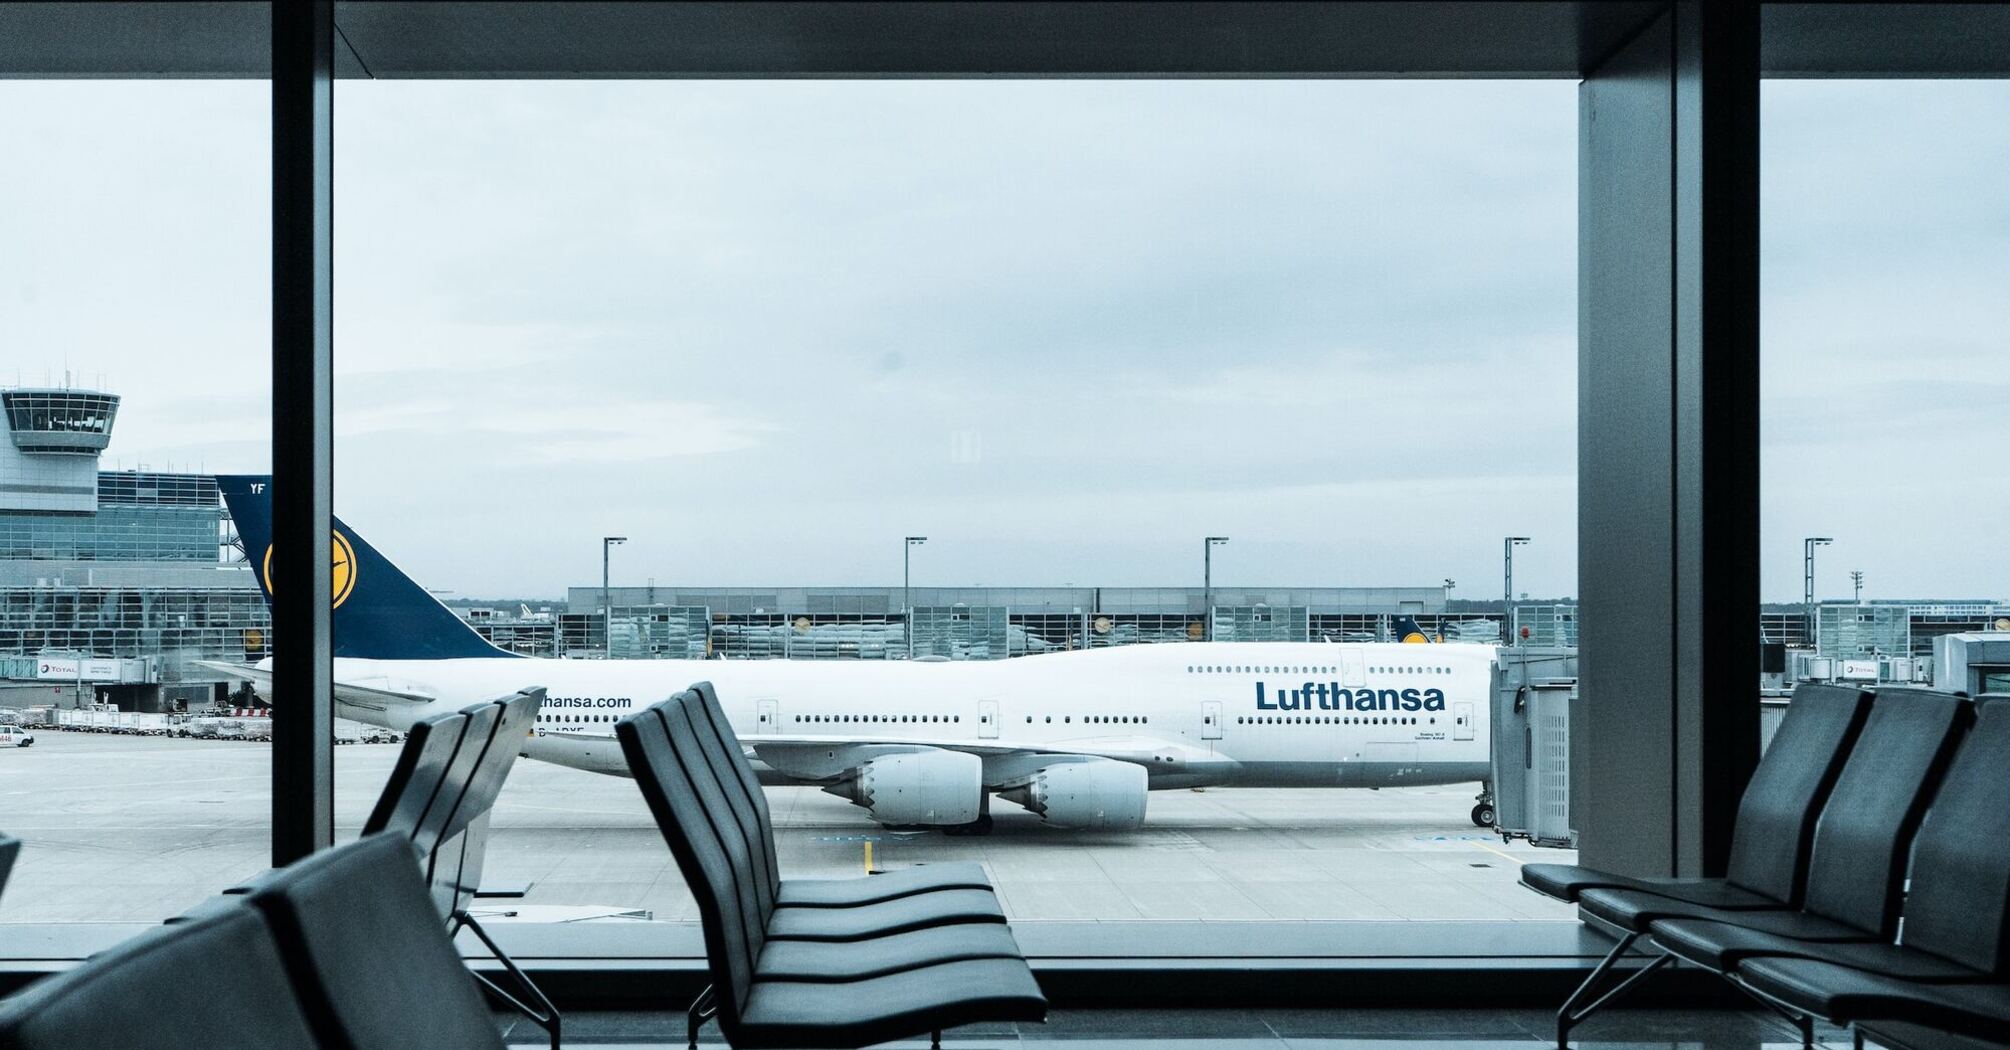 Lufthansa's airplane in airport